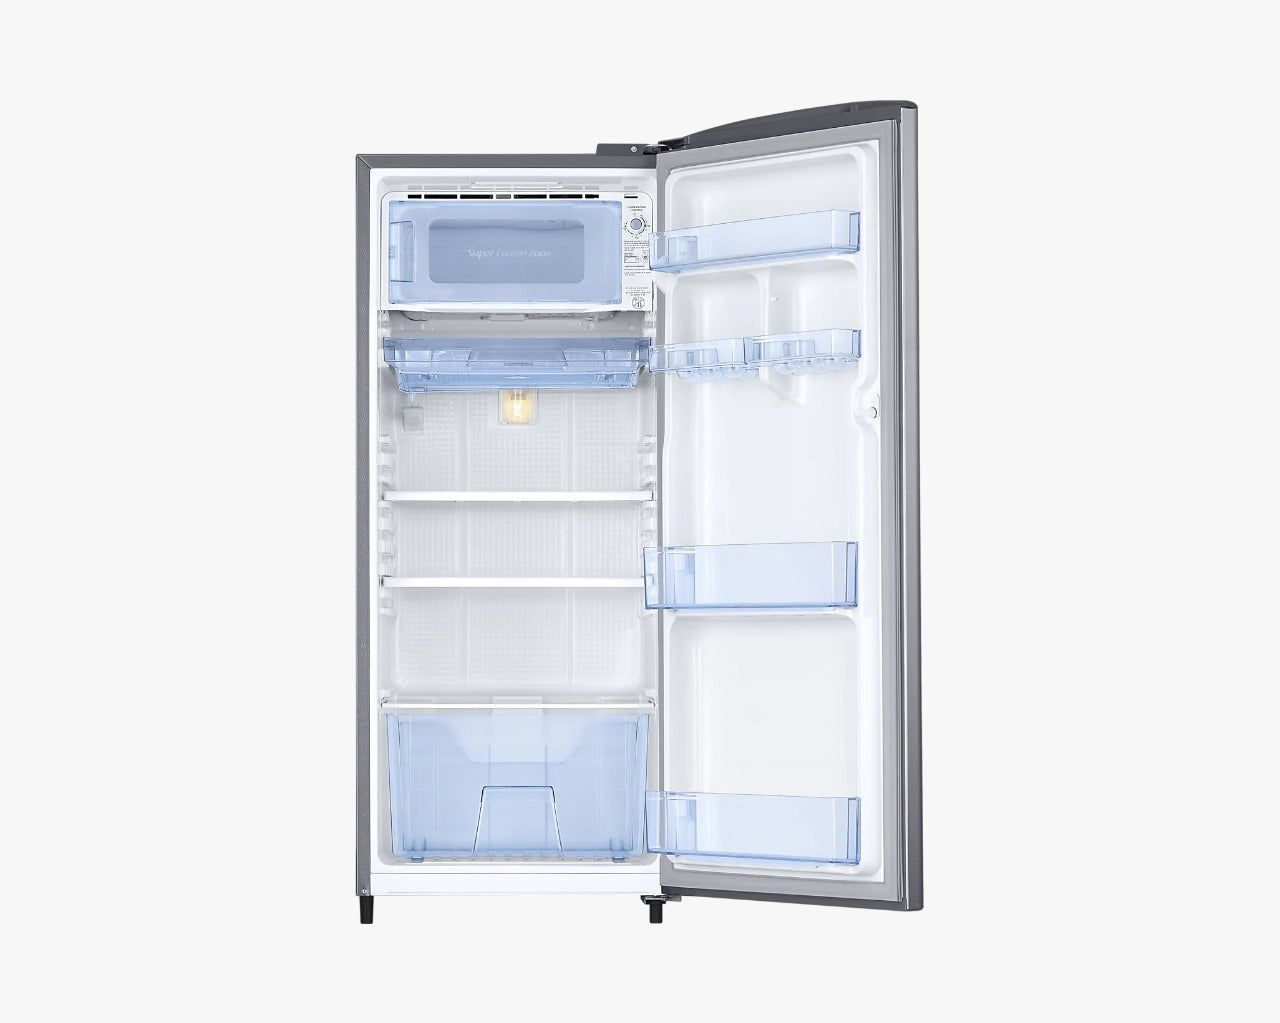 Samsung 192L Stylish Grandé Design Single Door Refrigerator RR20T2Y2YS8